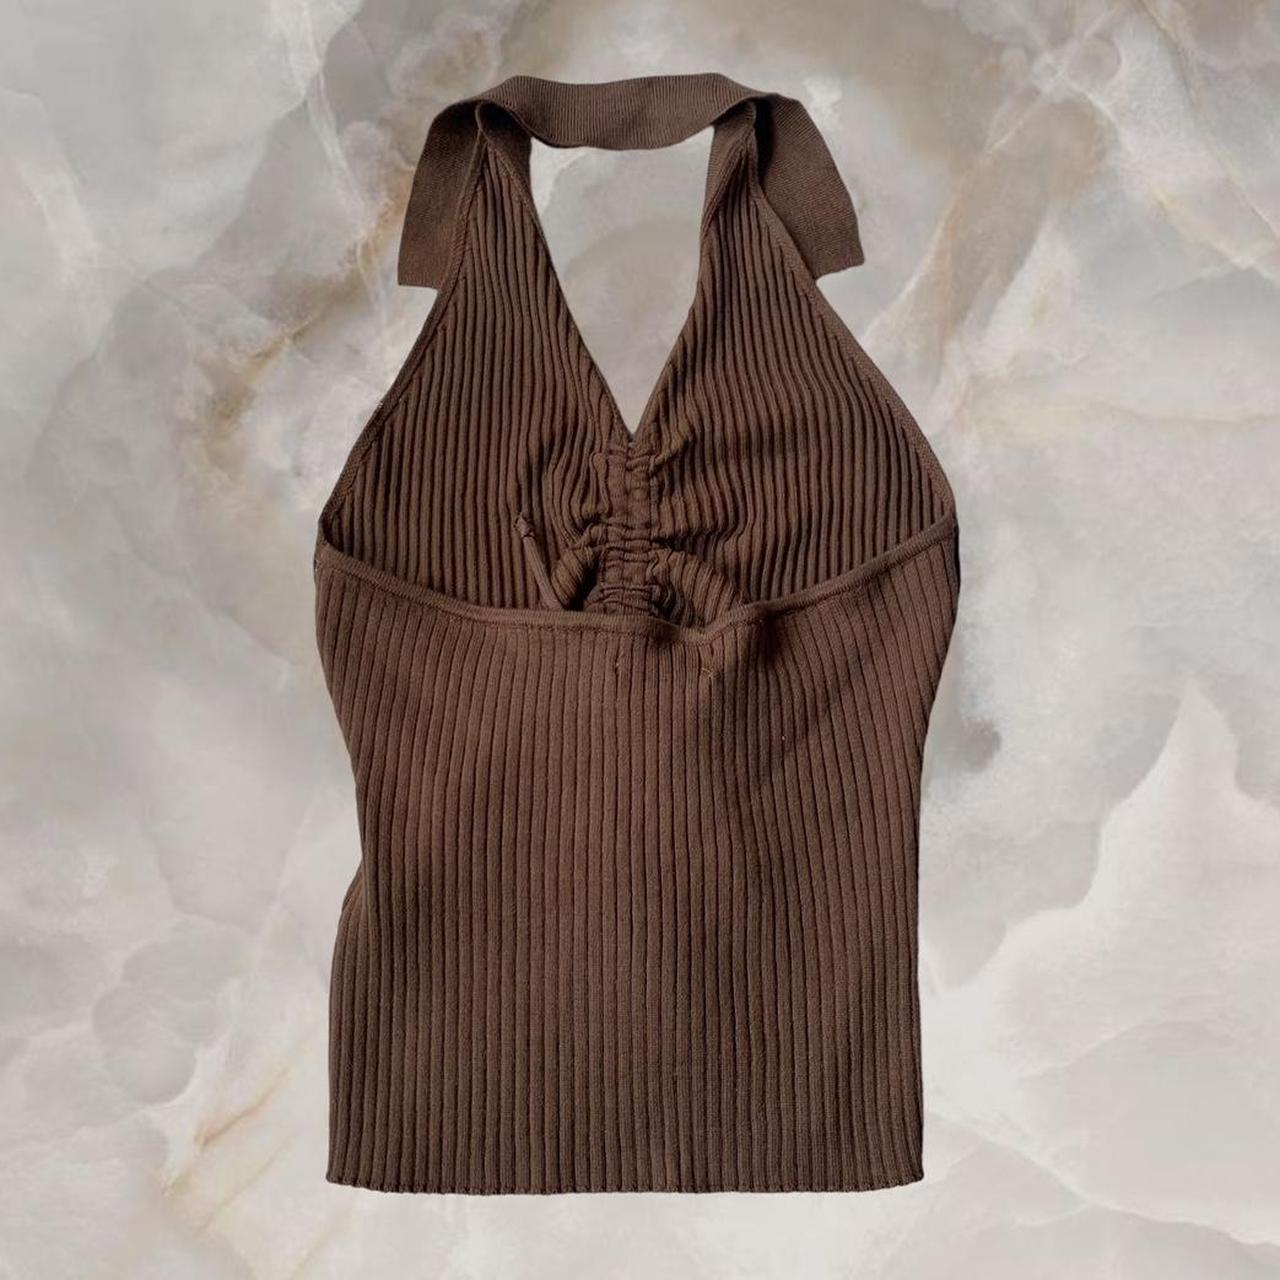 Full Circle Trends Women's Tan and Brown Vest (4)